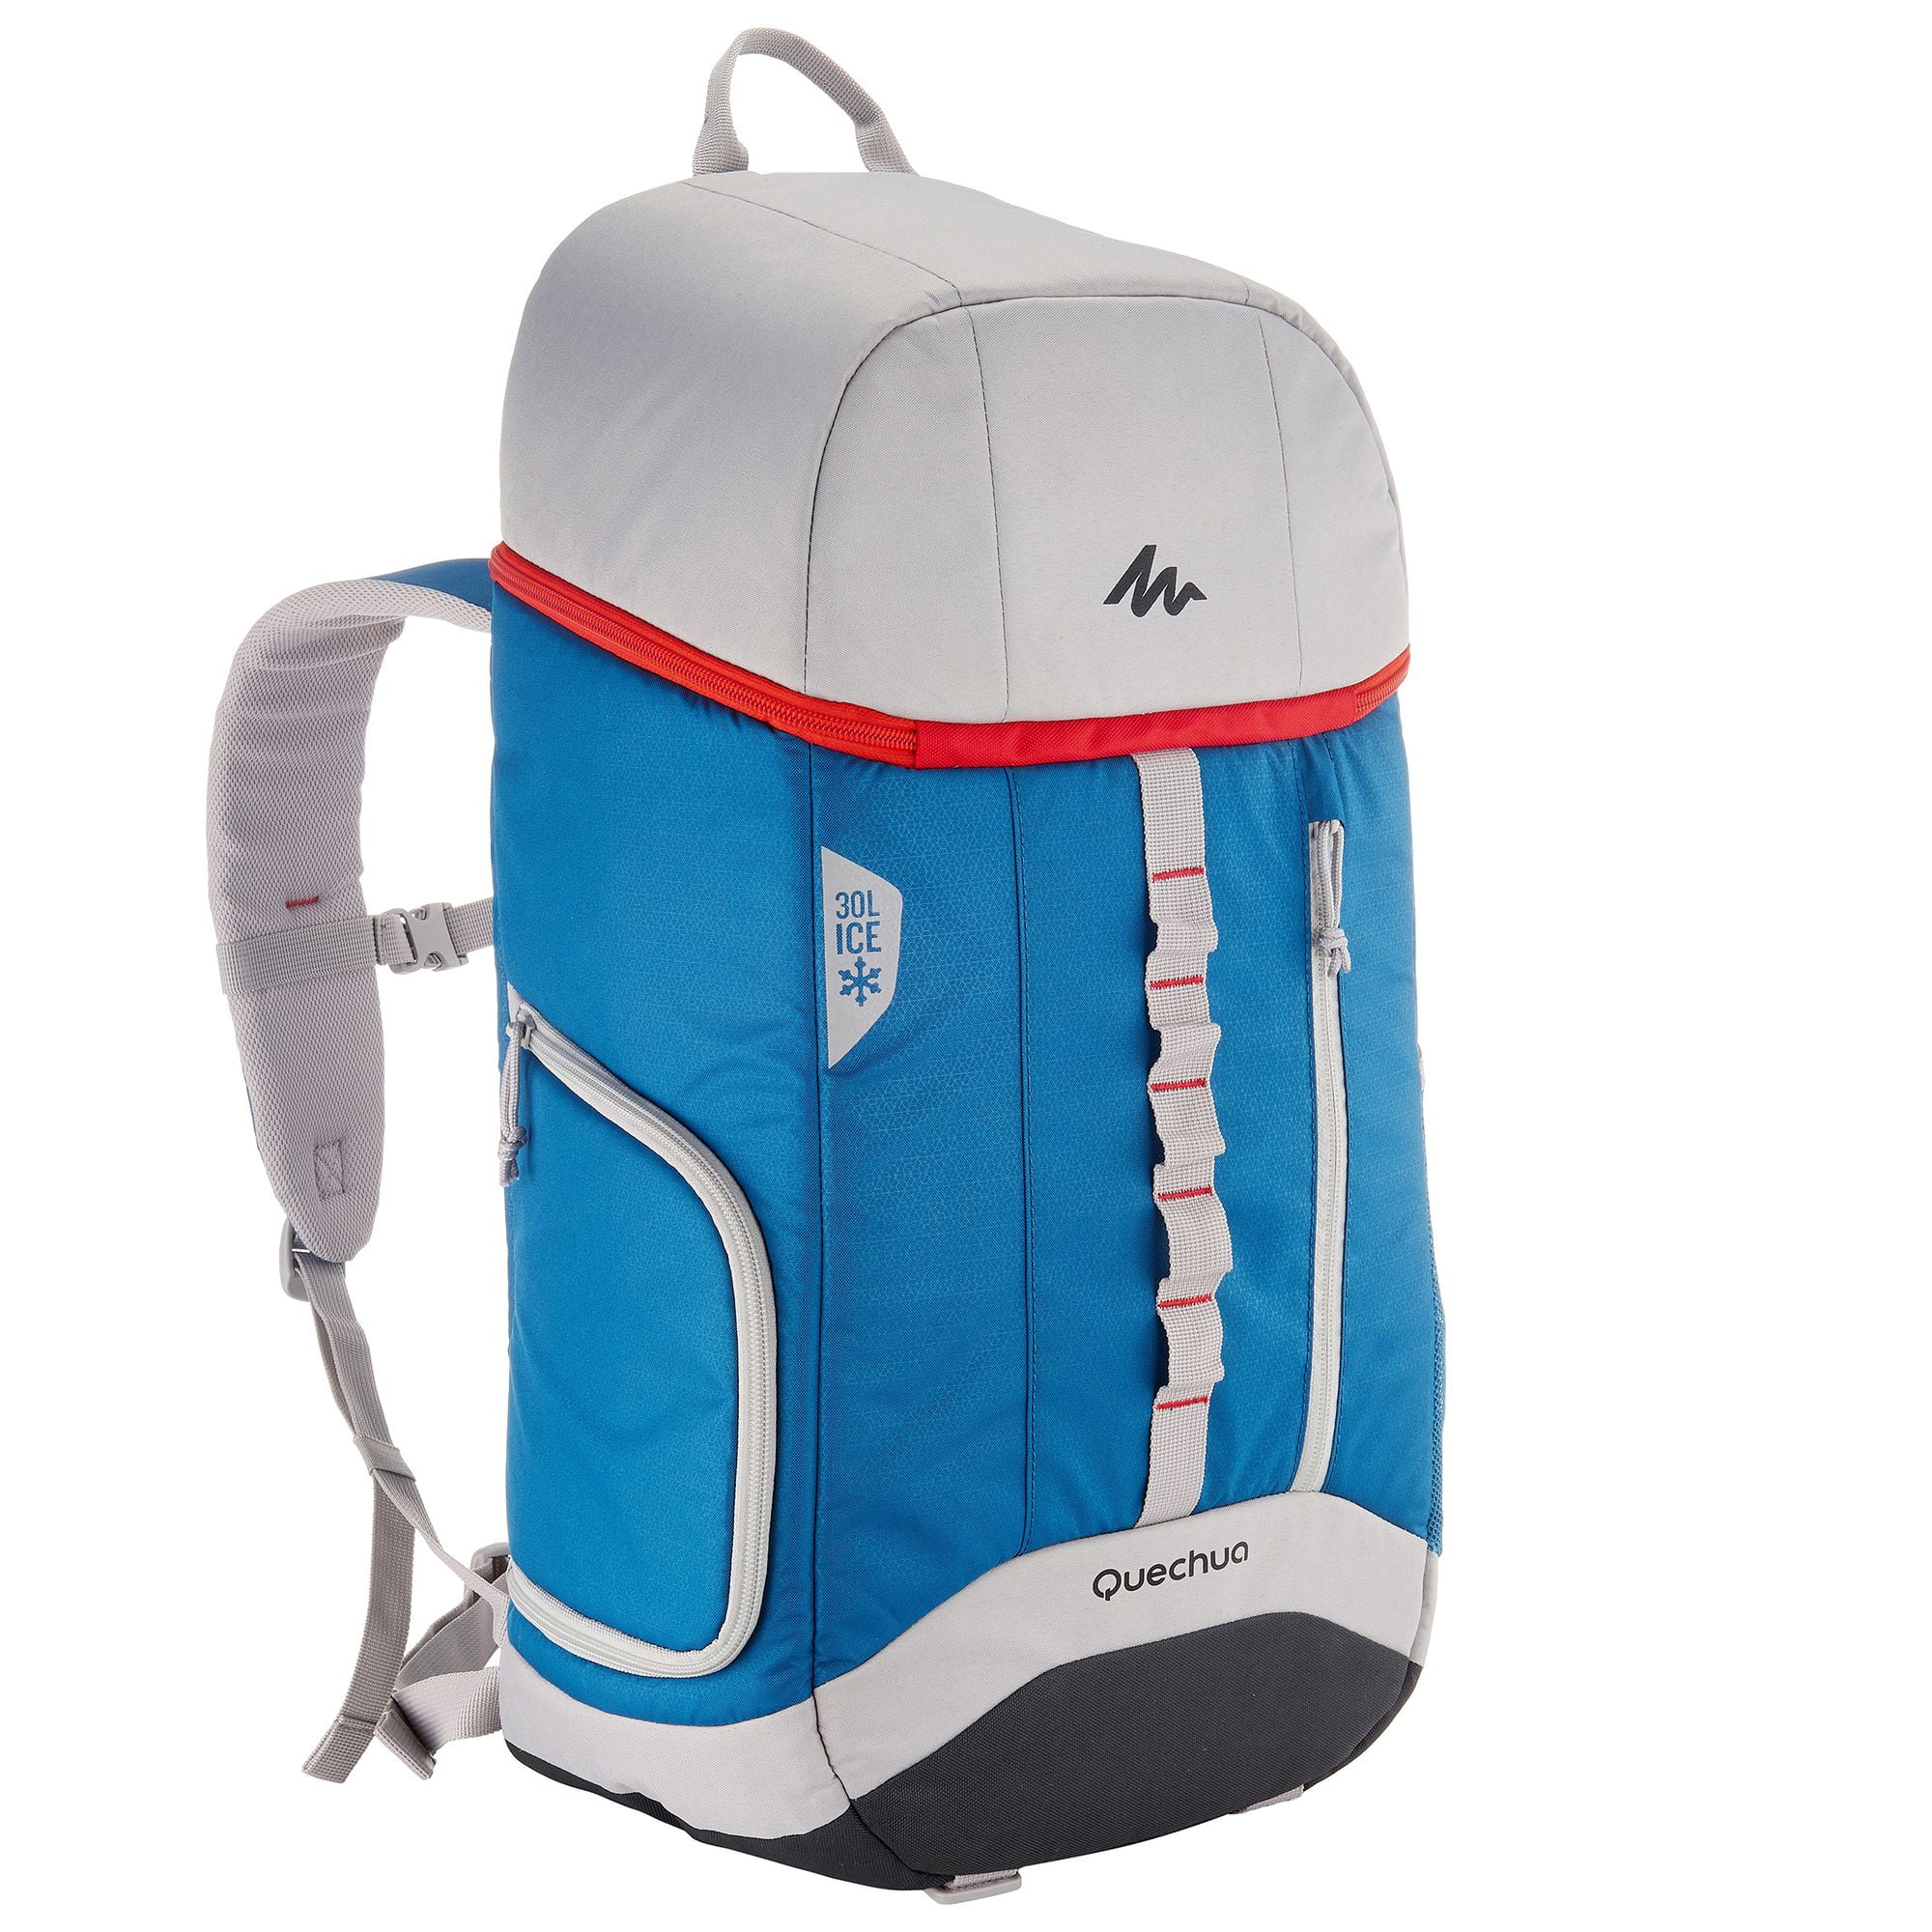 Decathlon Quechua, Hiking Cooler Backpack 30 L , Blue Multi, Size: 30 Large